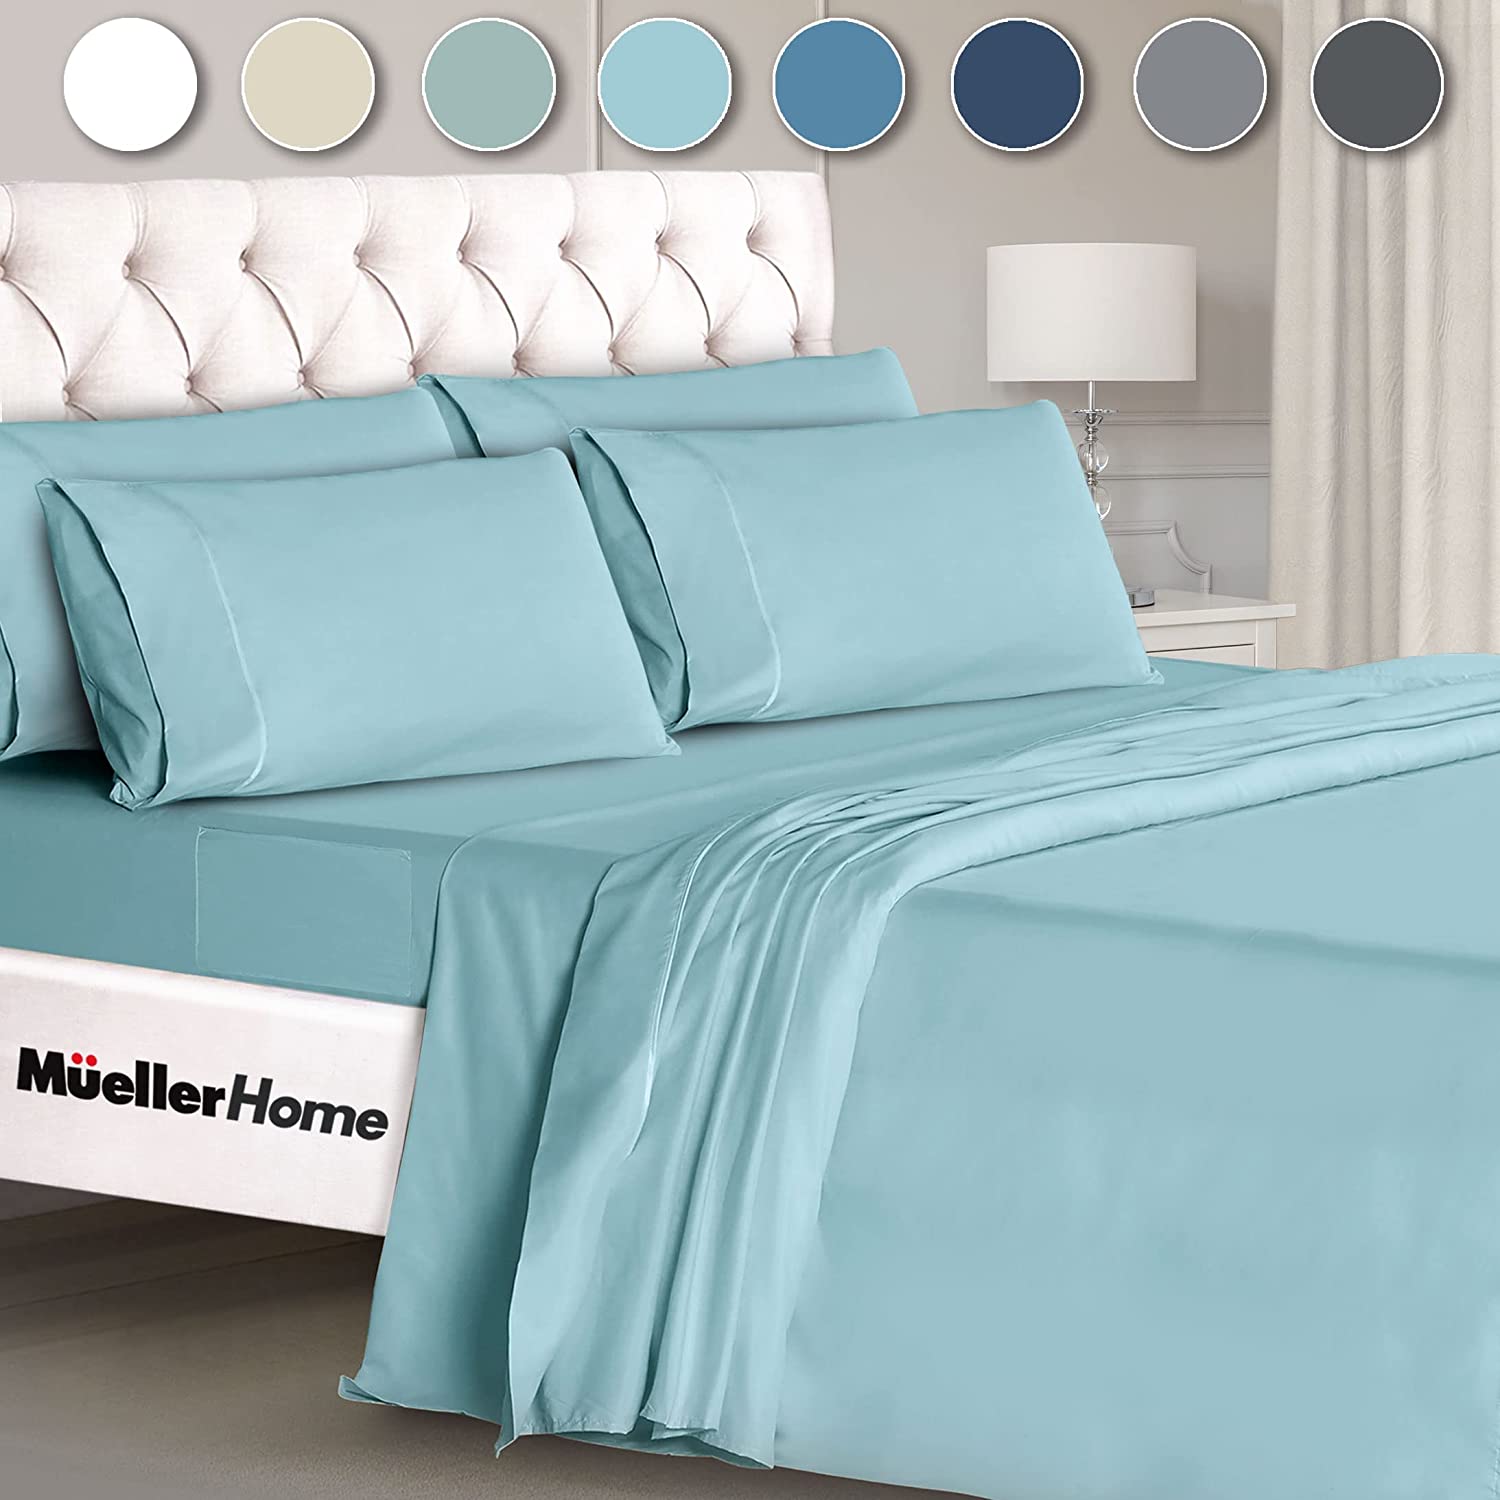 muellerhome_premium-hotel-collection-6-piece-full-size-sheet-set-light-teal1